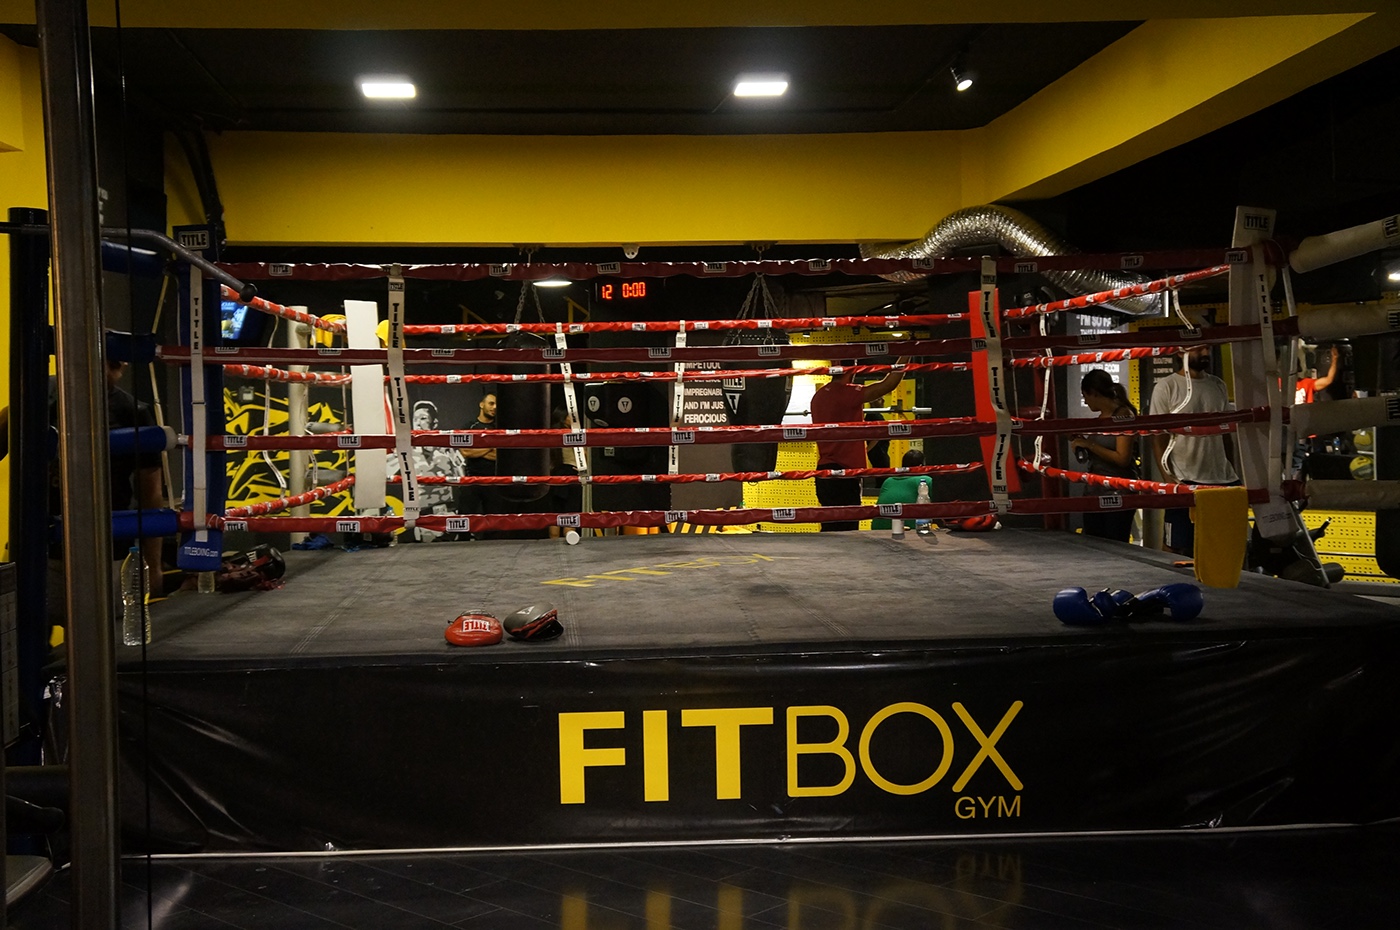 gym sports fitness Boxing underground garage